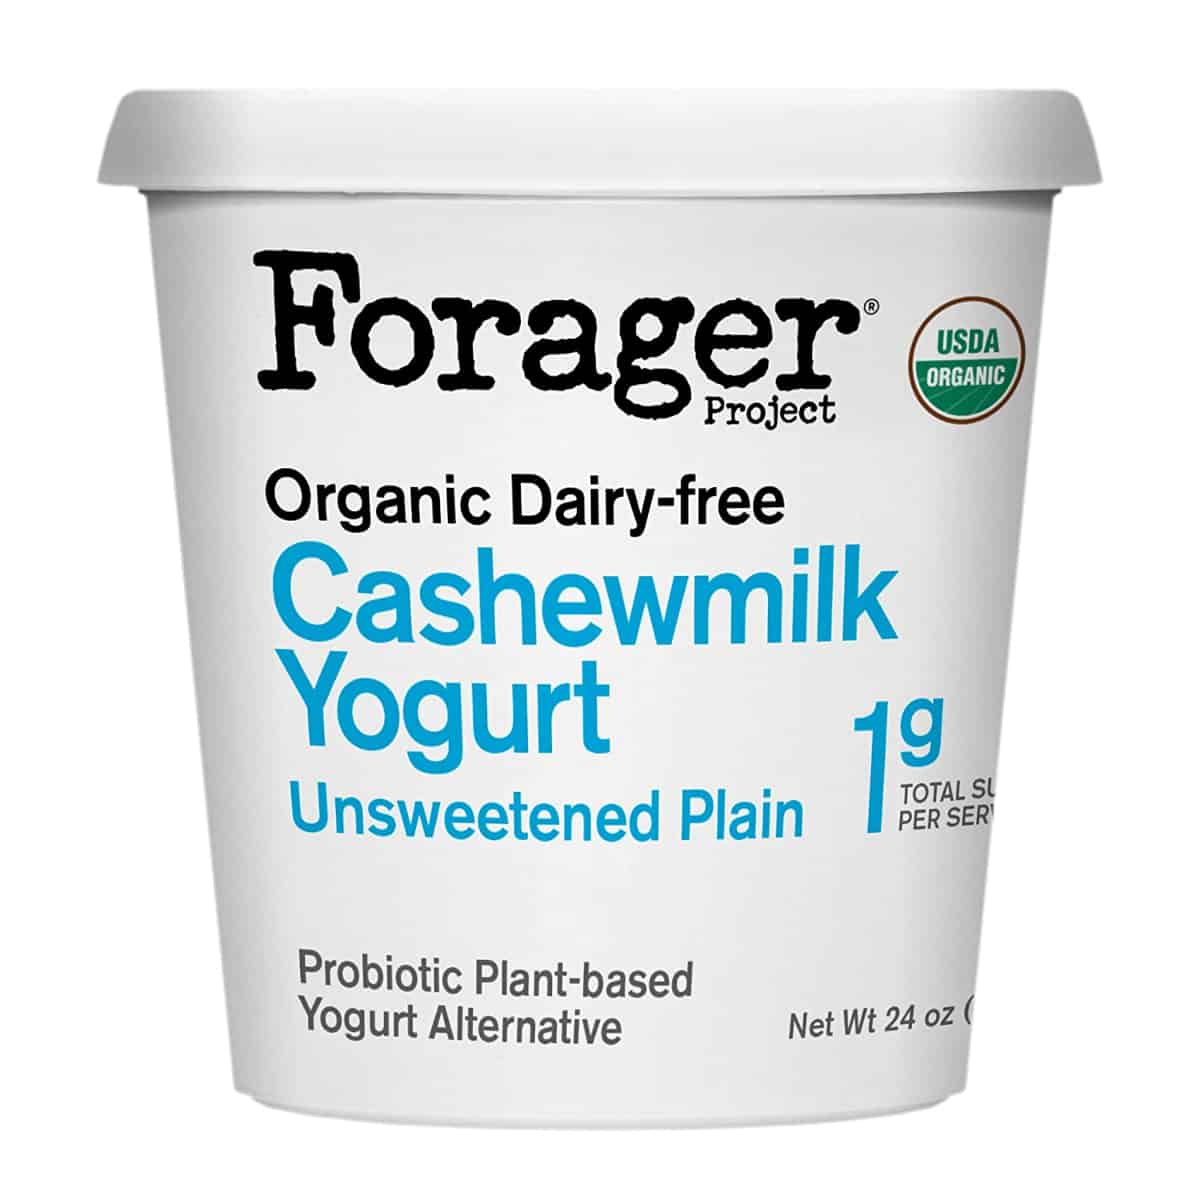 Forager Cashewmilk Yogurt.